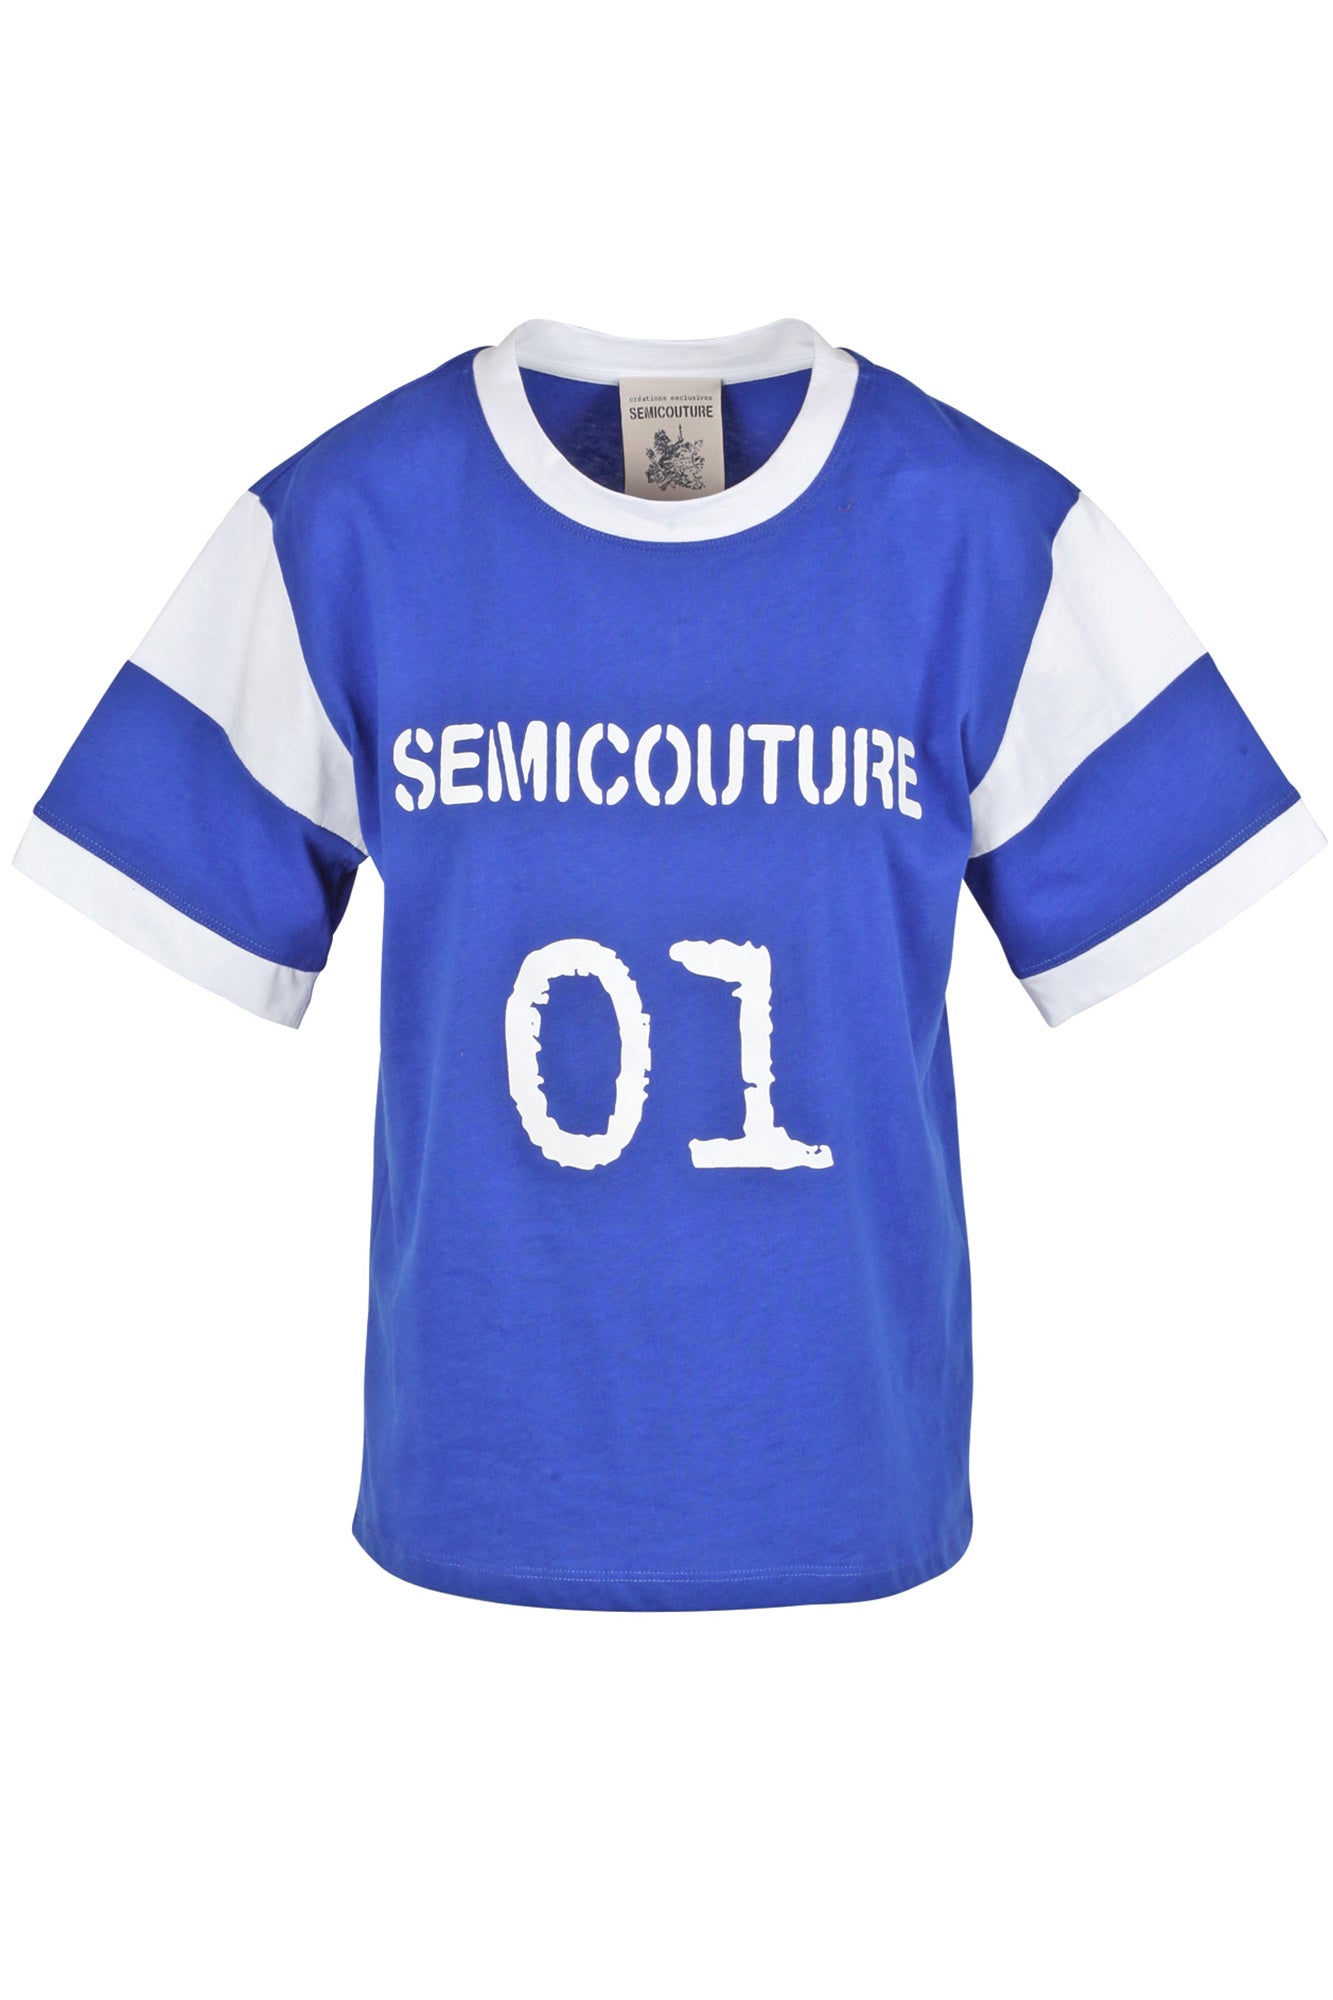 Semi Couture - T-shirt - 430497 - Bluette